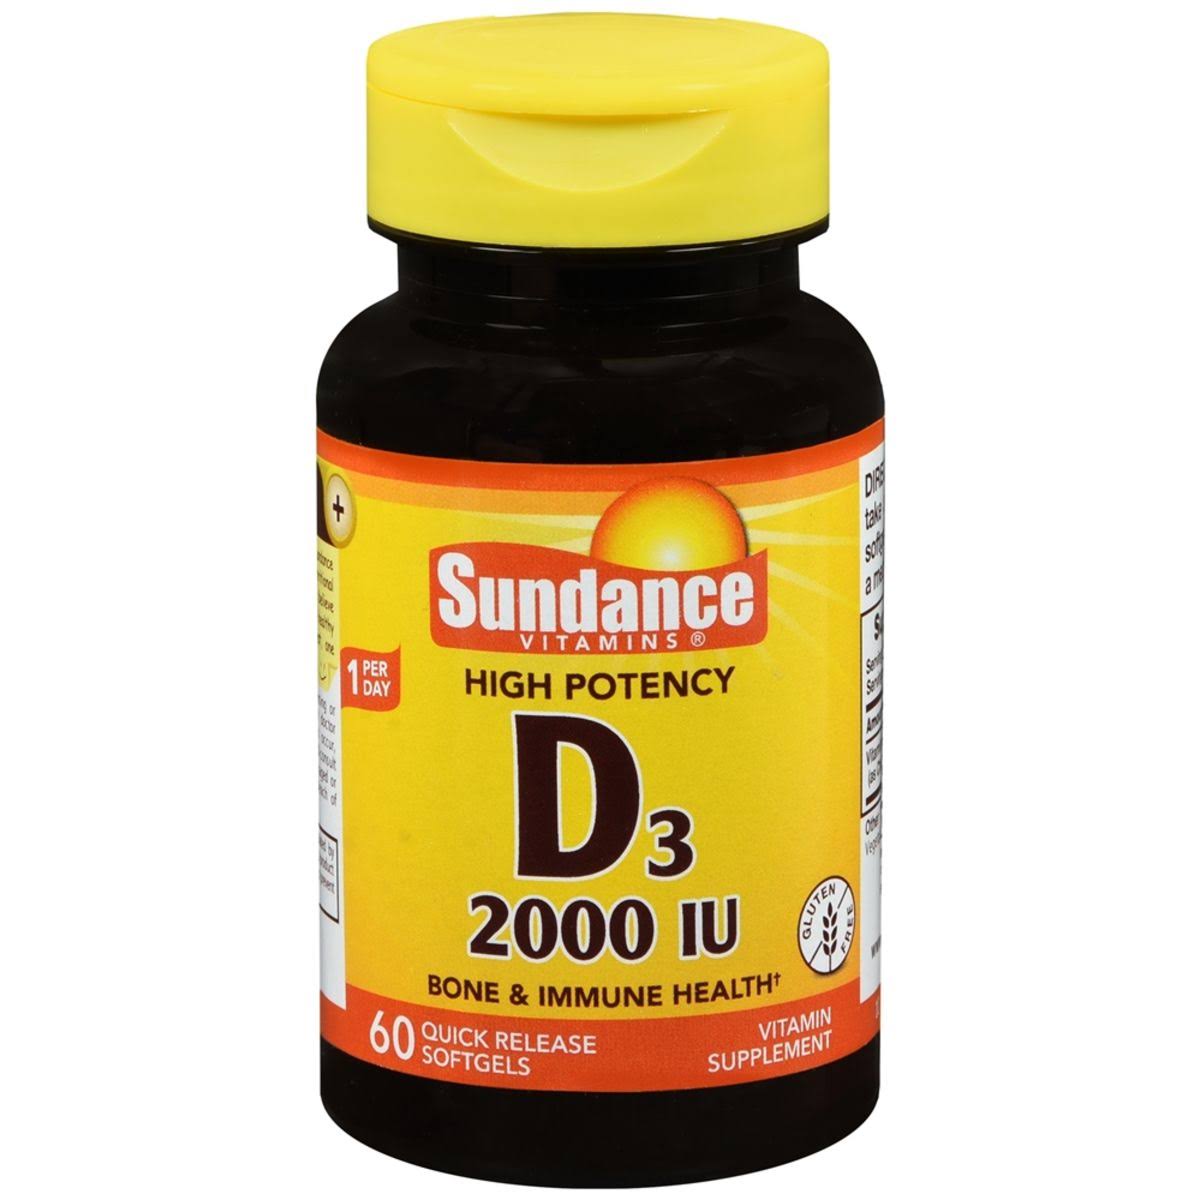 Sundance D3 2000 IU Quick Release Supplement - 60ct